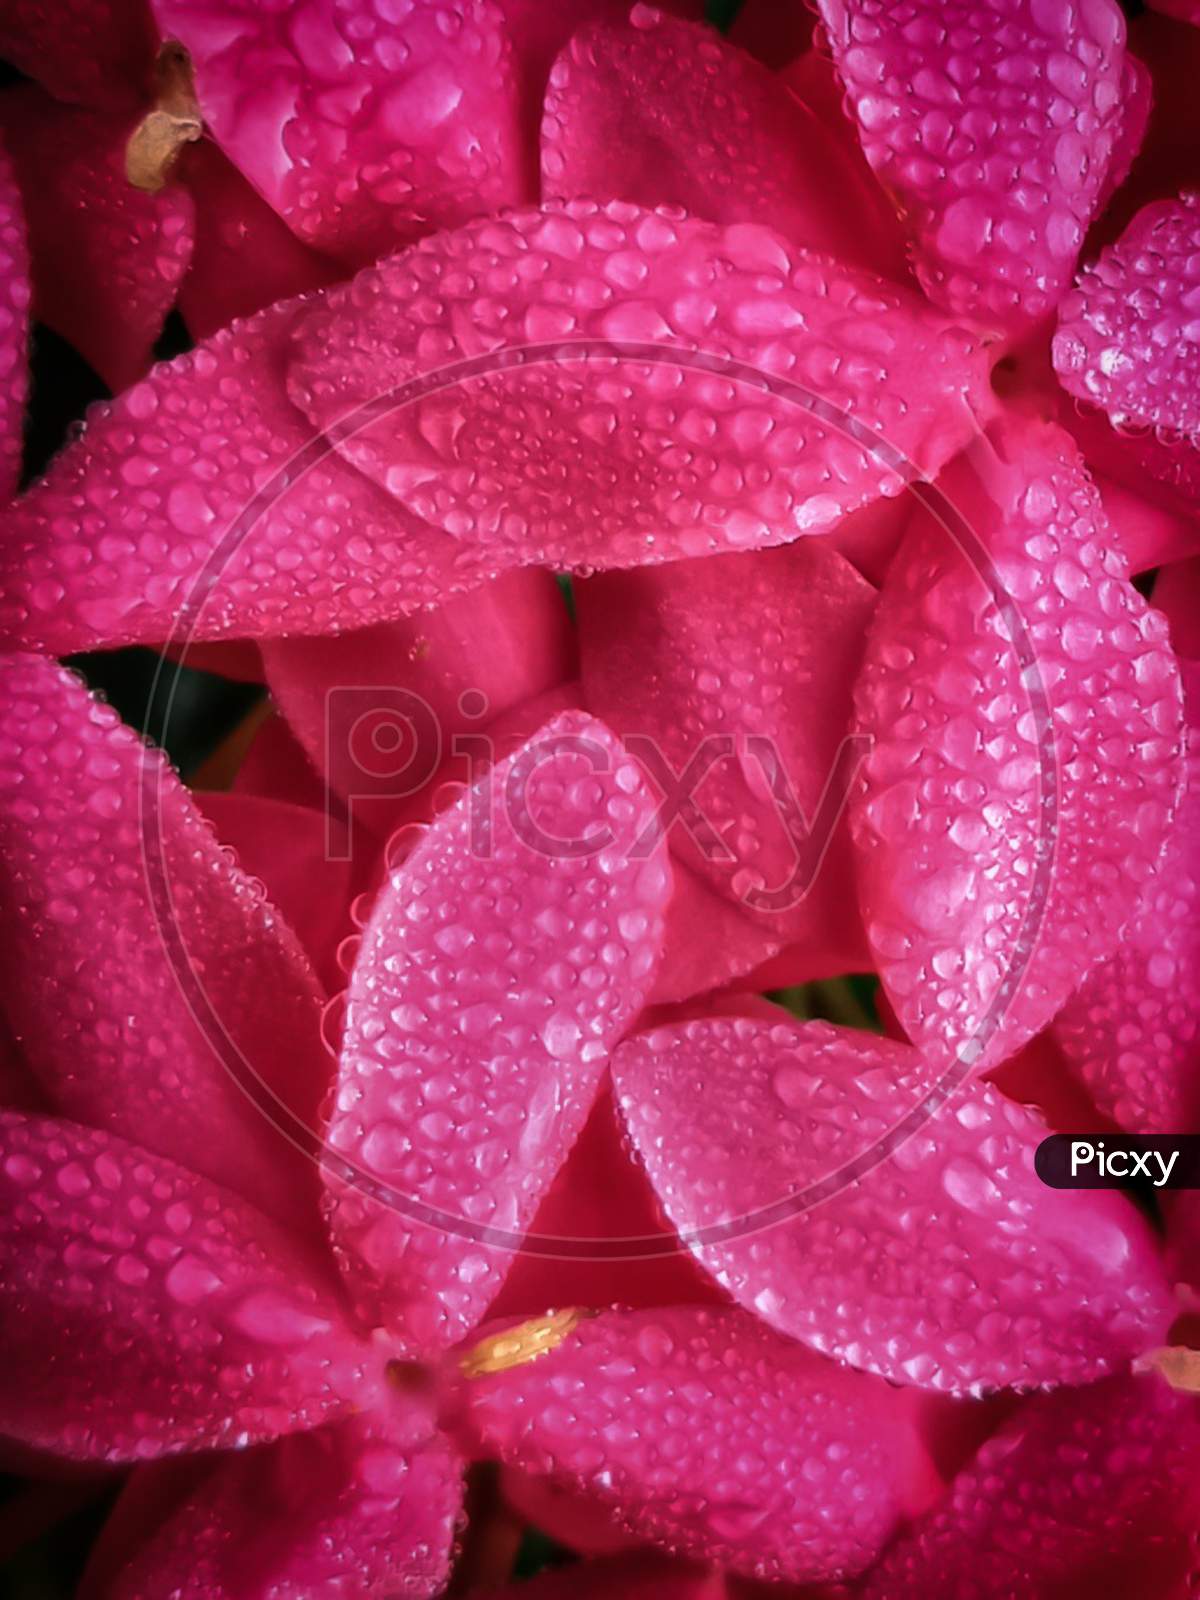 Dew droplets on the petals of jungle geranium flower